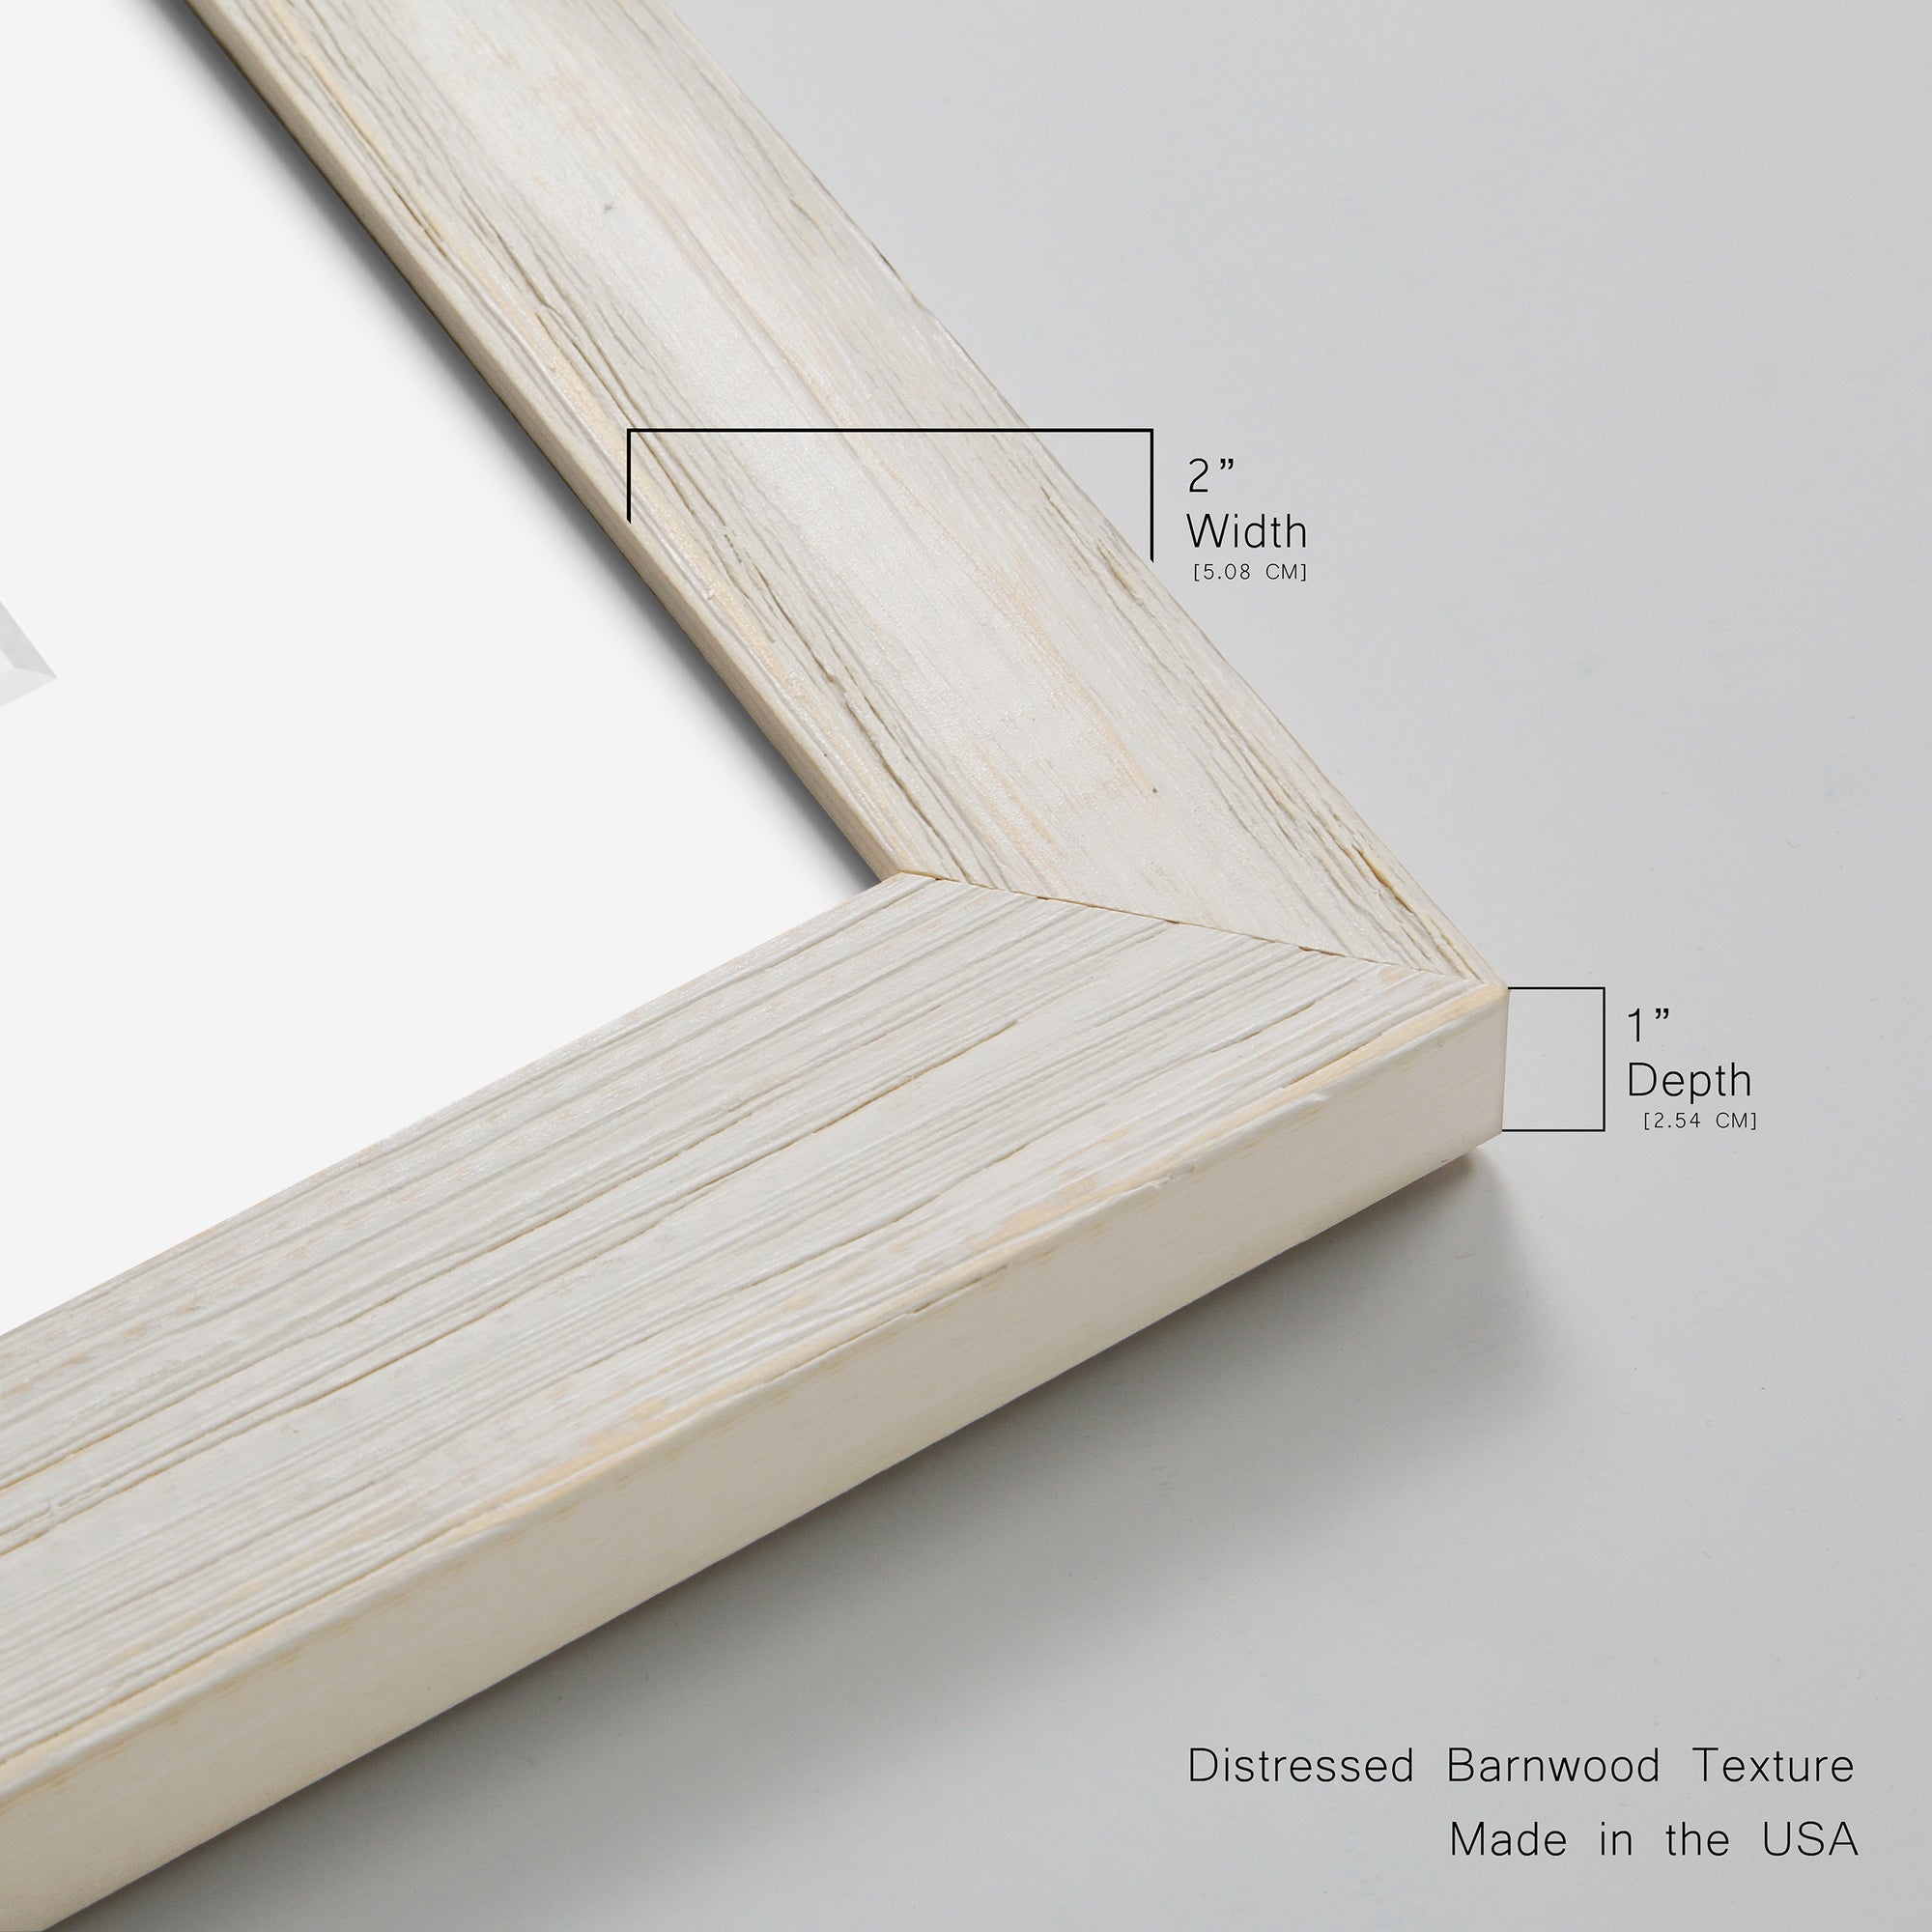 Sketchy Bath III - Premium Framed Print - Distressed Barnwood Frame - Ready to Hang